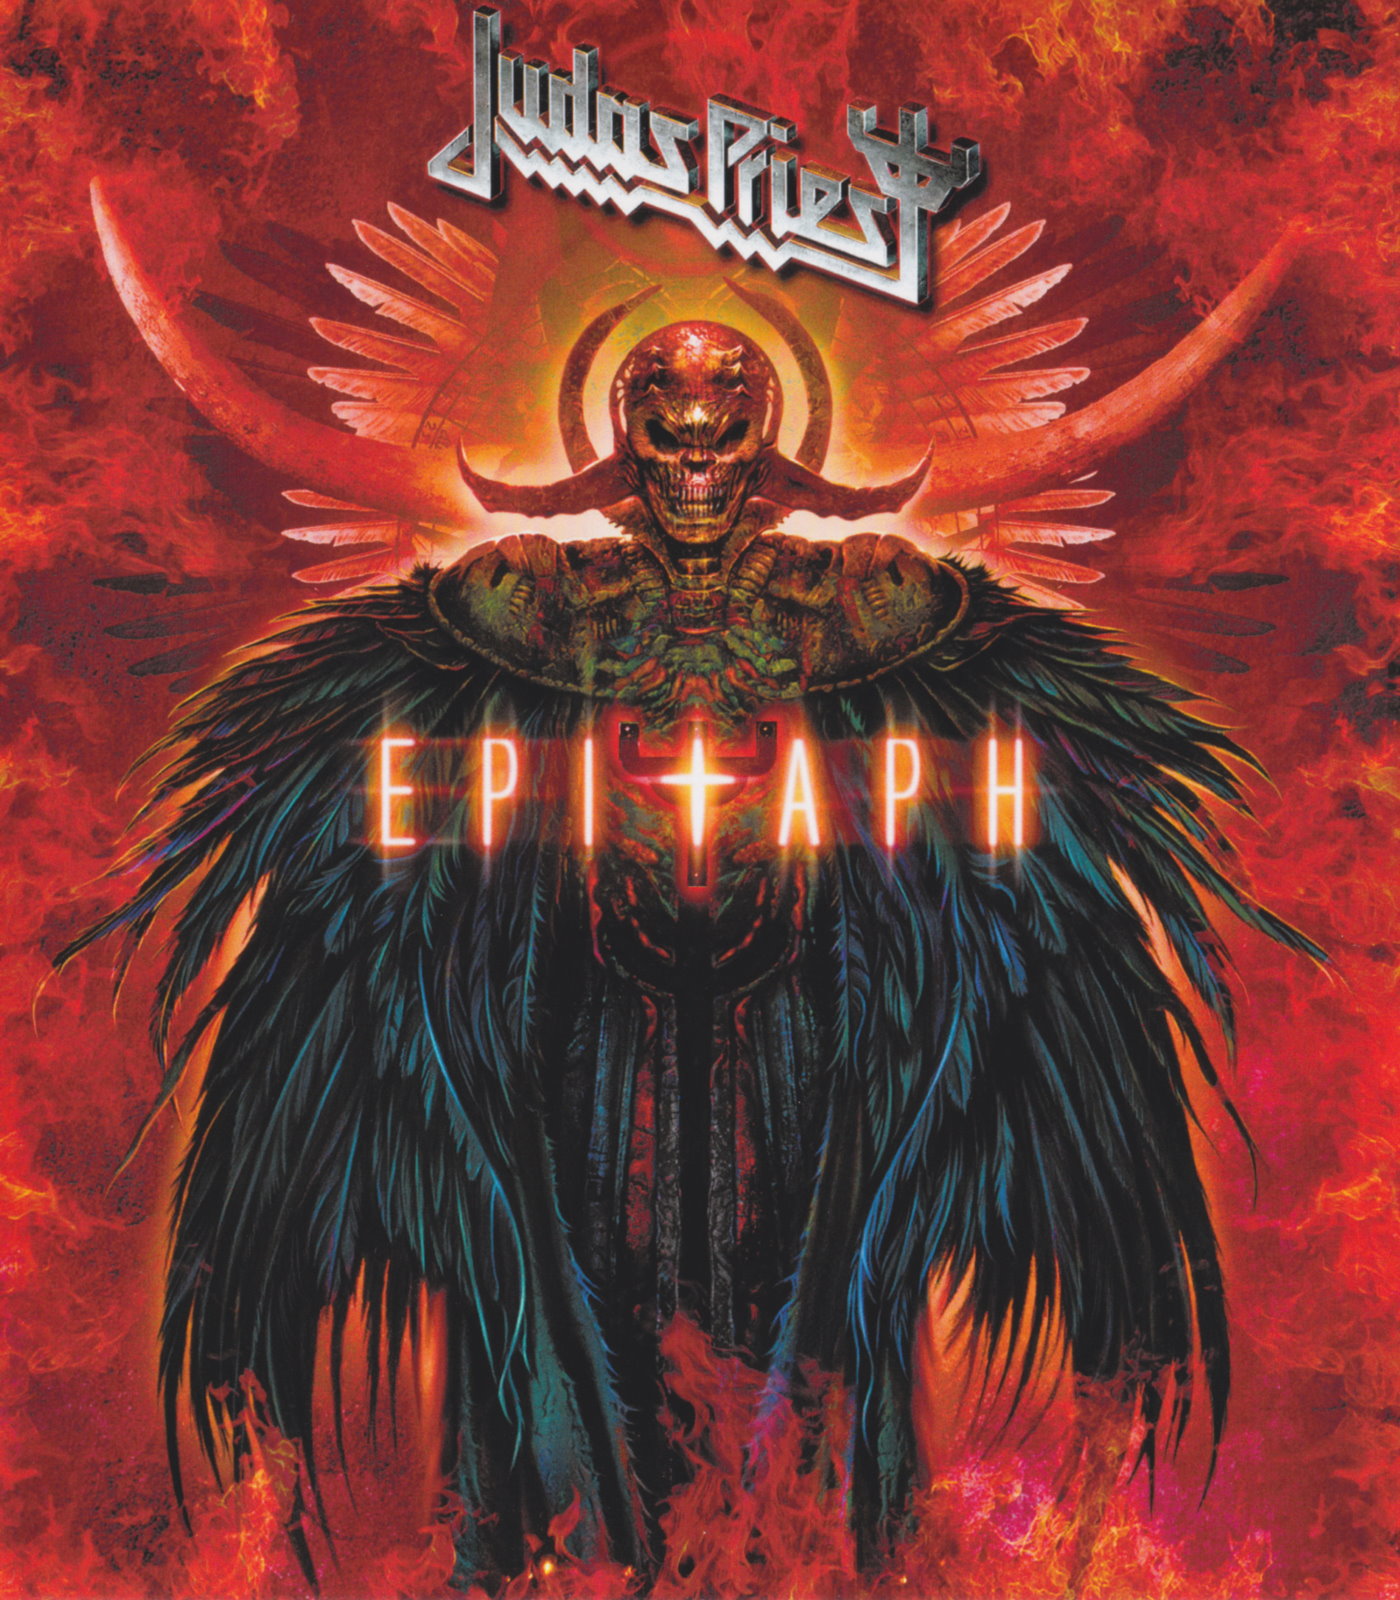 Cover - Judas Priest - Epitaph.jpg